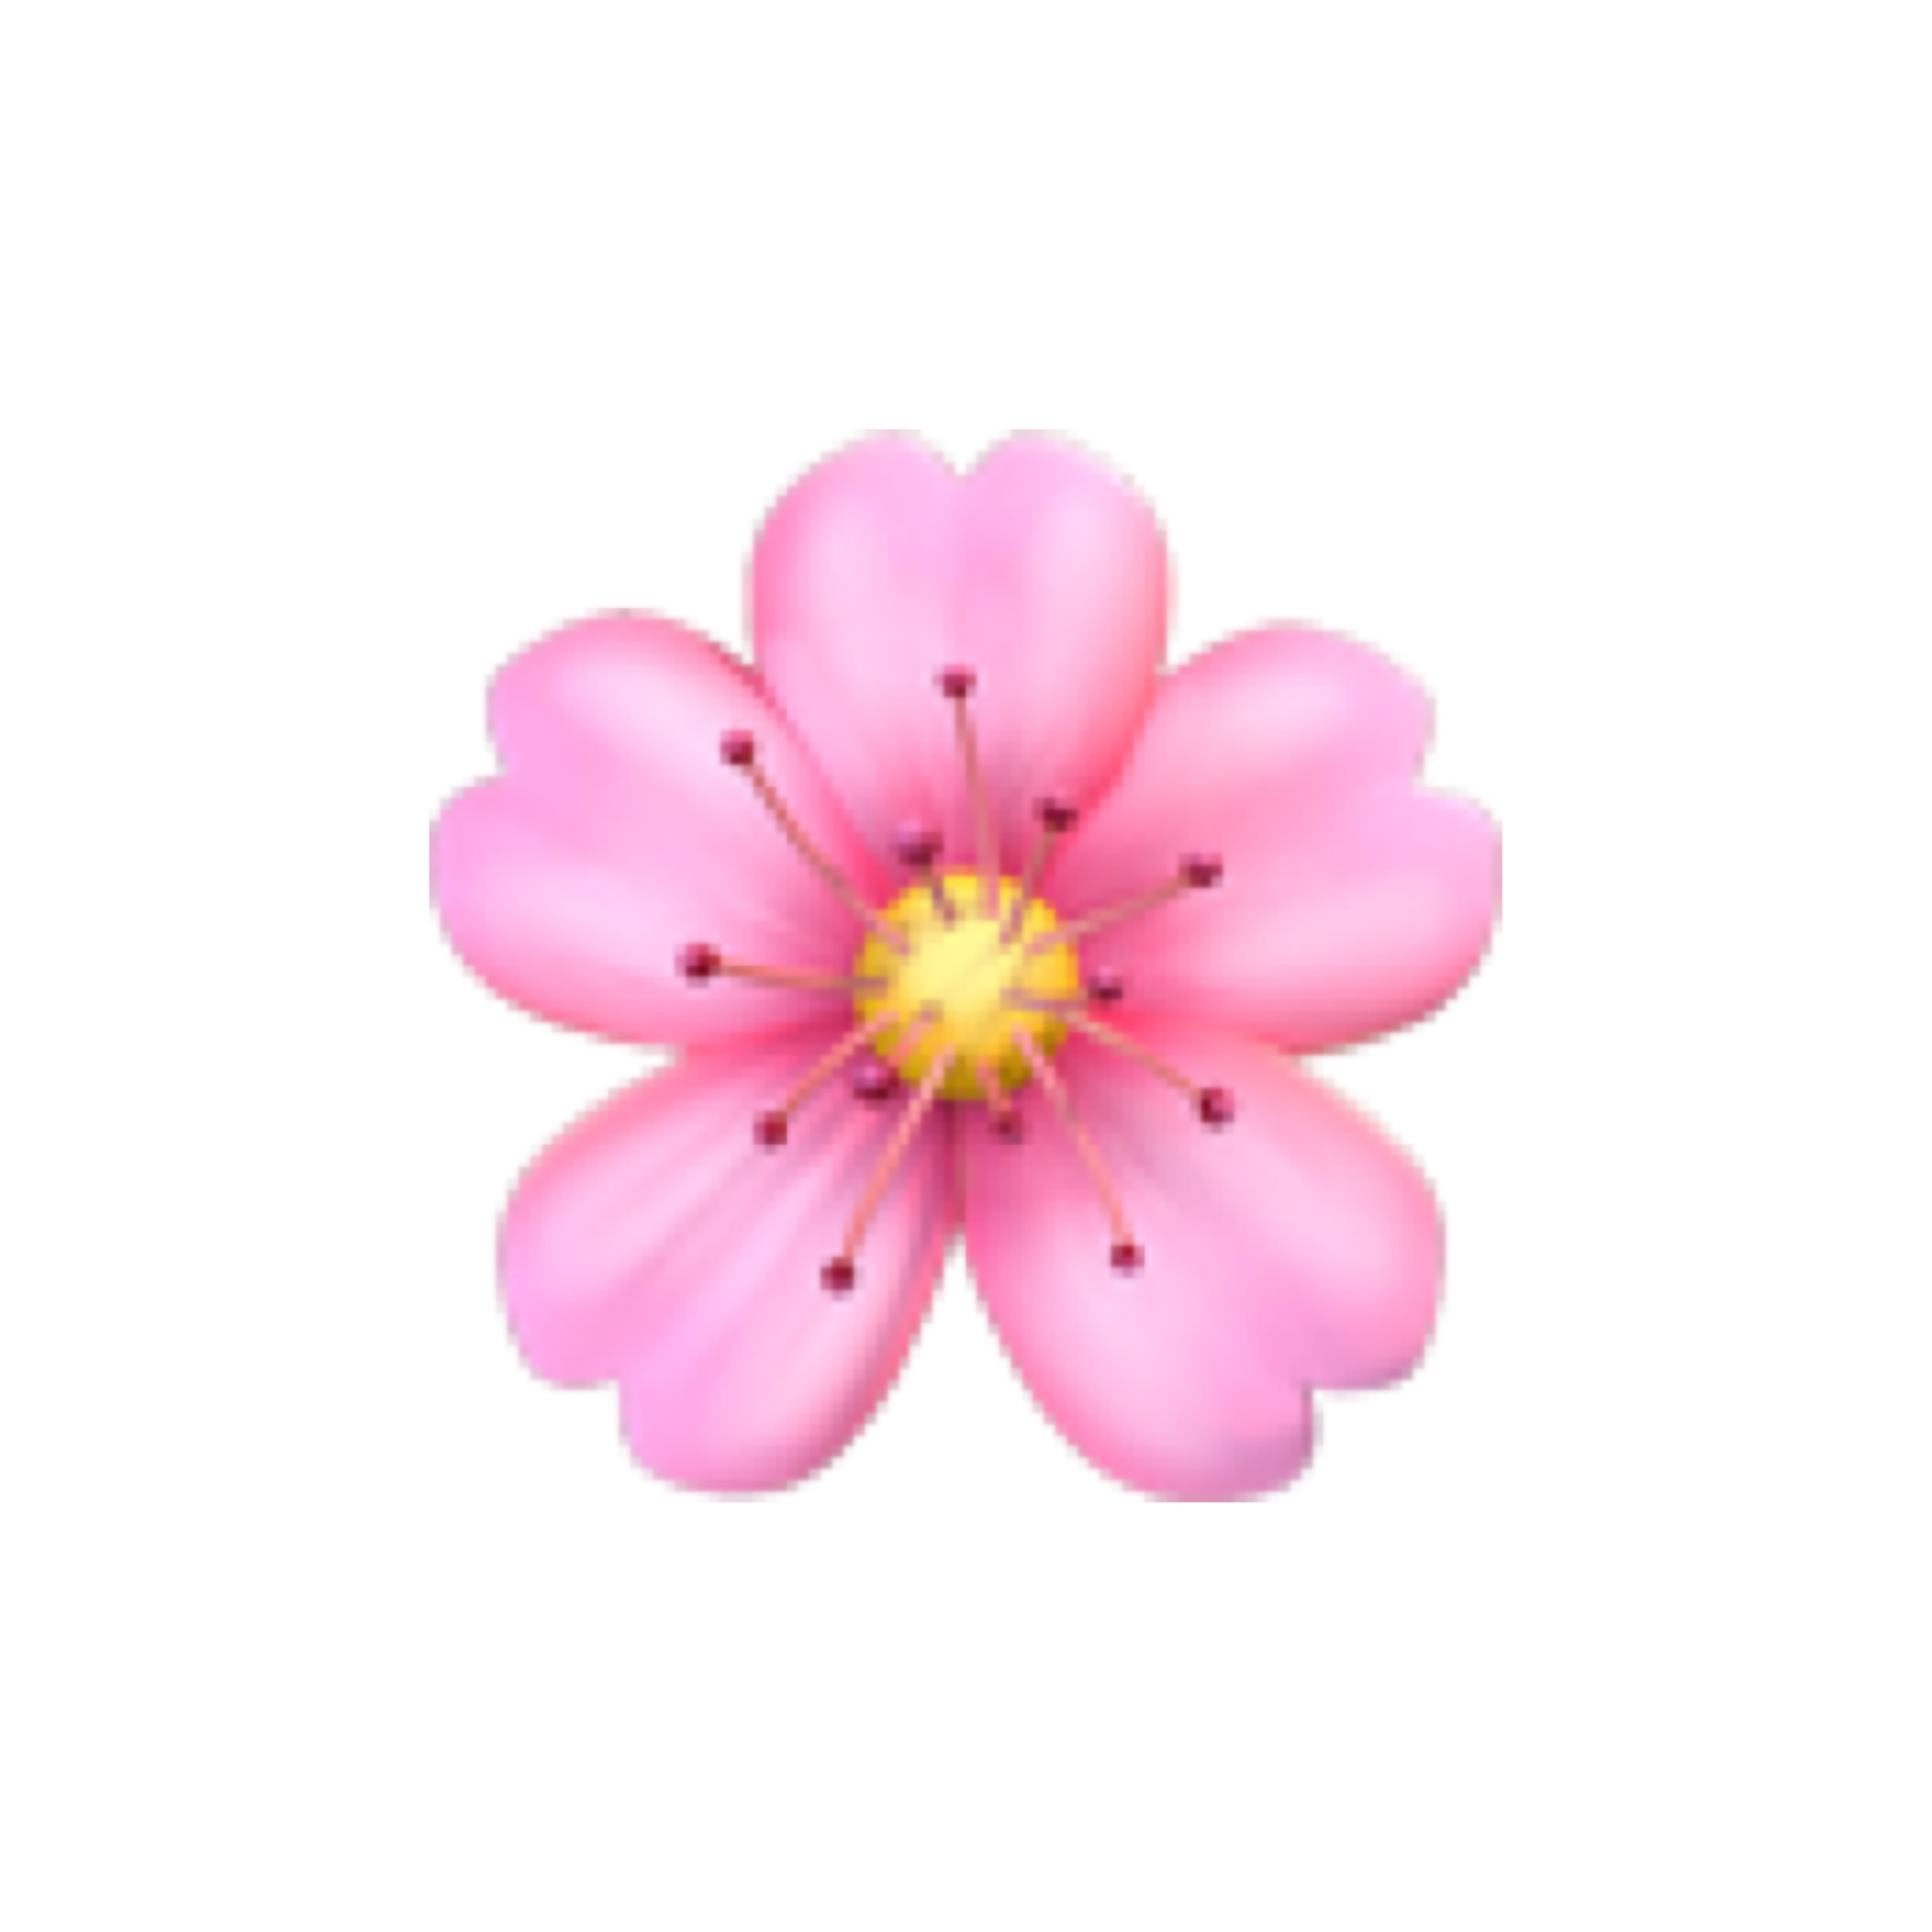  flower  pink rosa blume ios apple  emoji  emojis freetoedi 